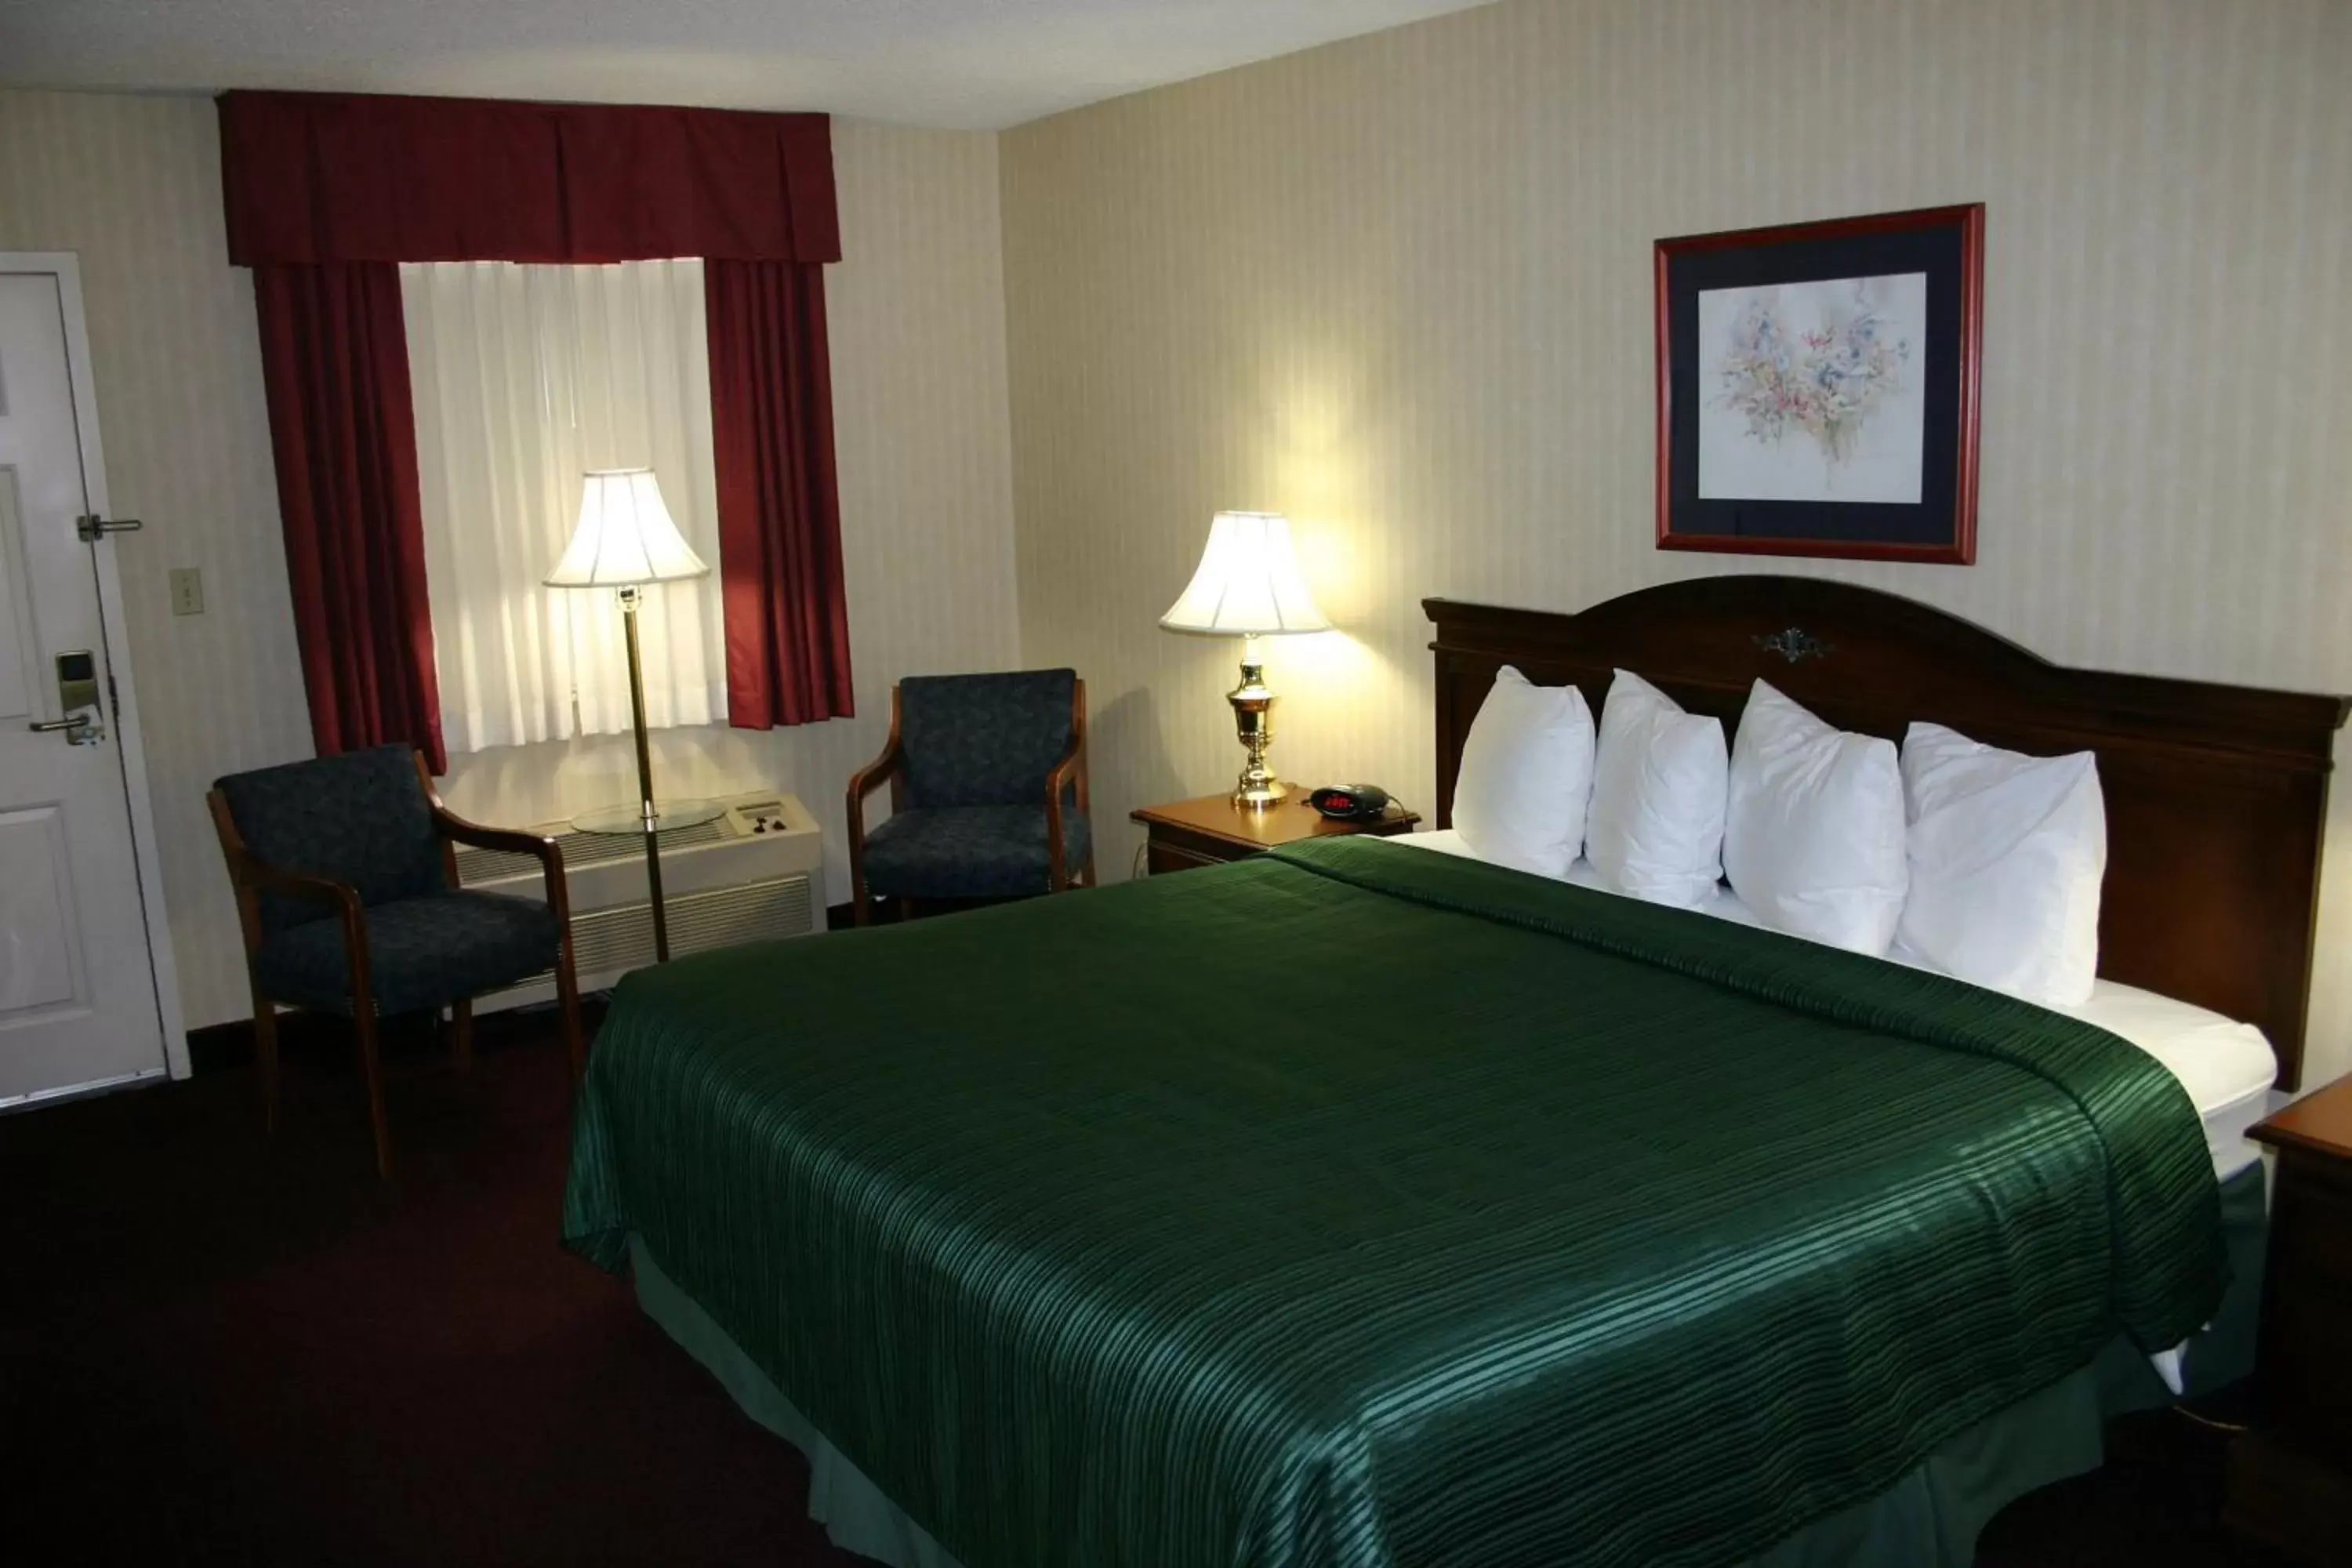 King Room - 1st Floor in Quality Inn Gettysburg Battlefield